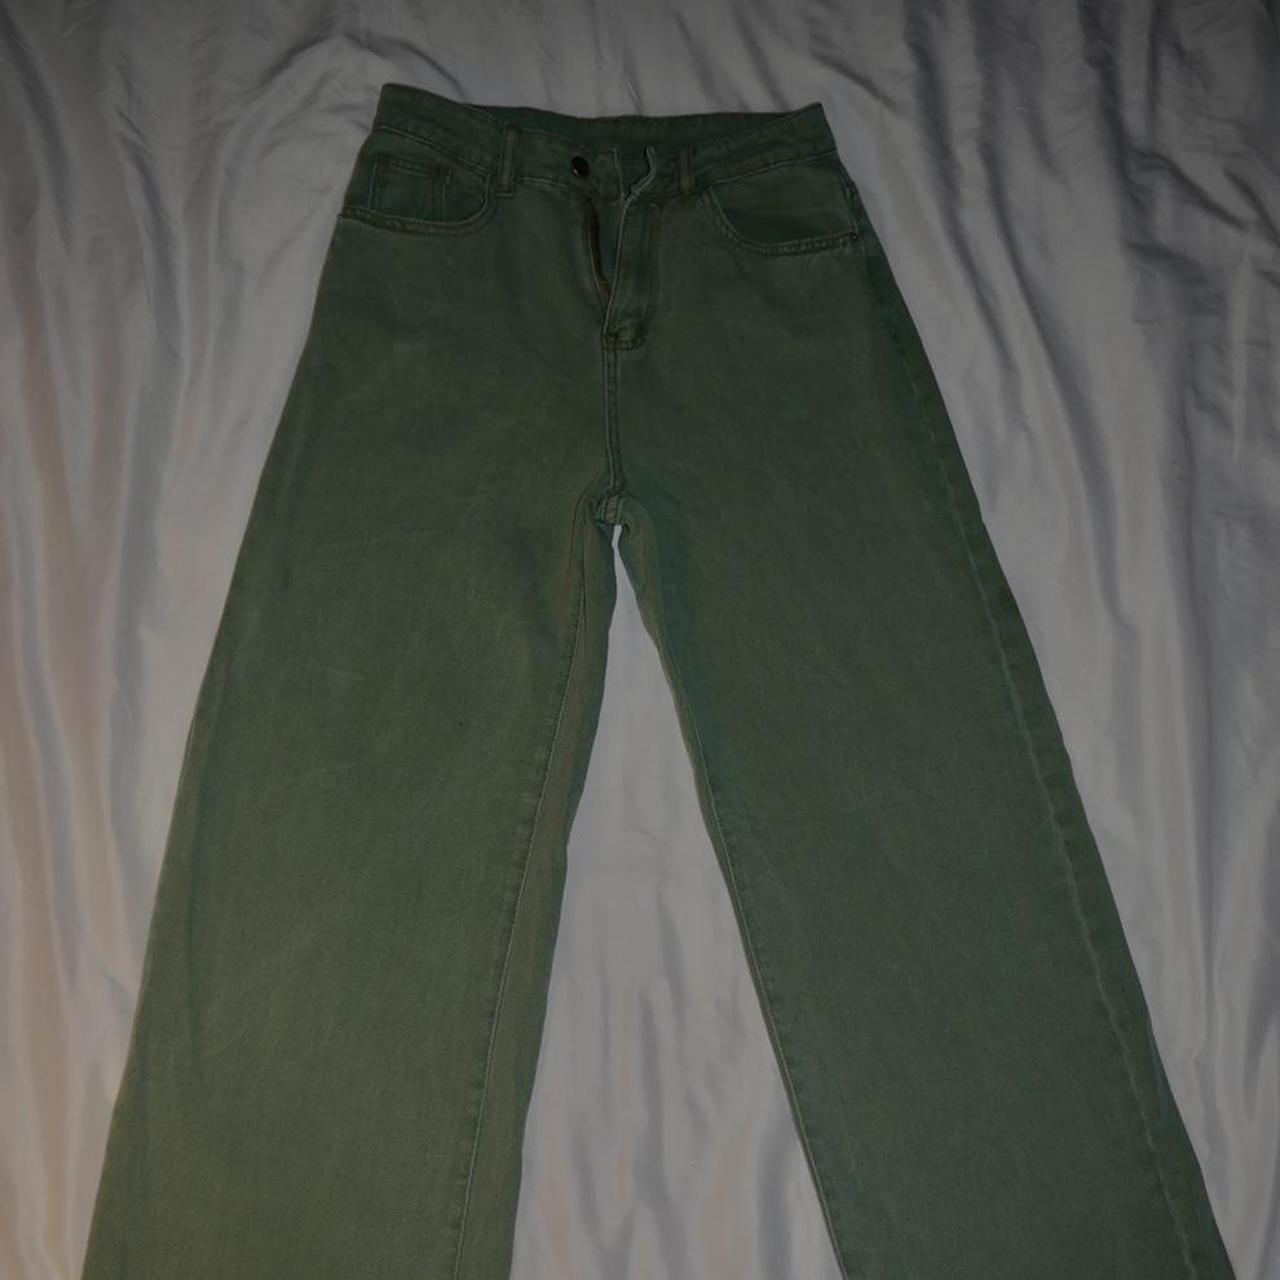 Light green wide legged pant #y2k #vintage #plt - Depop